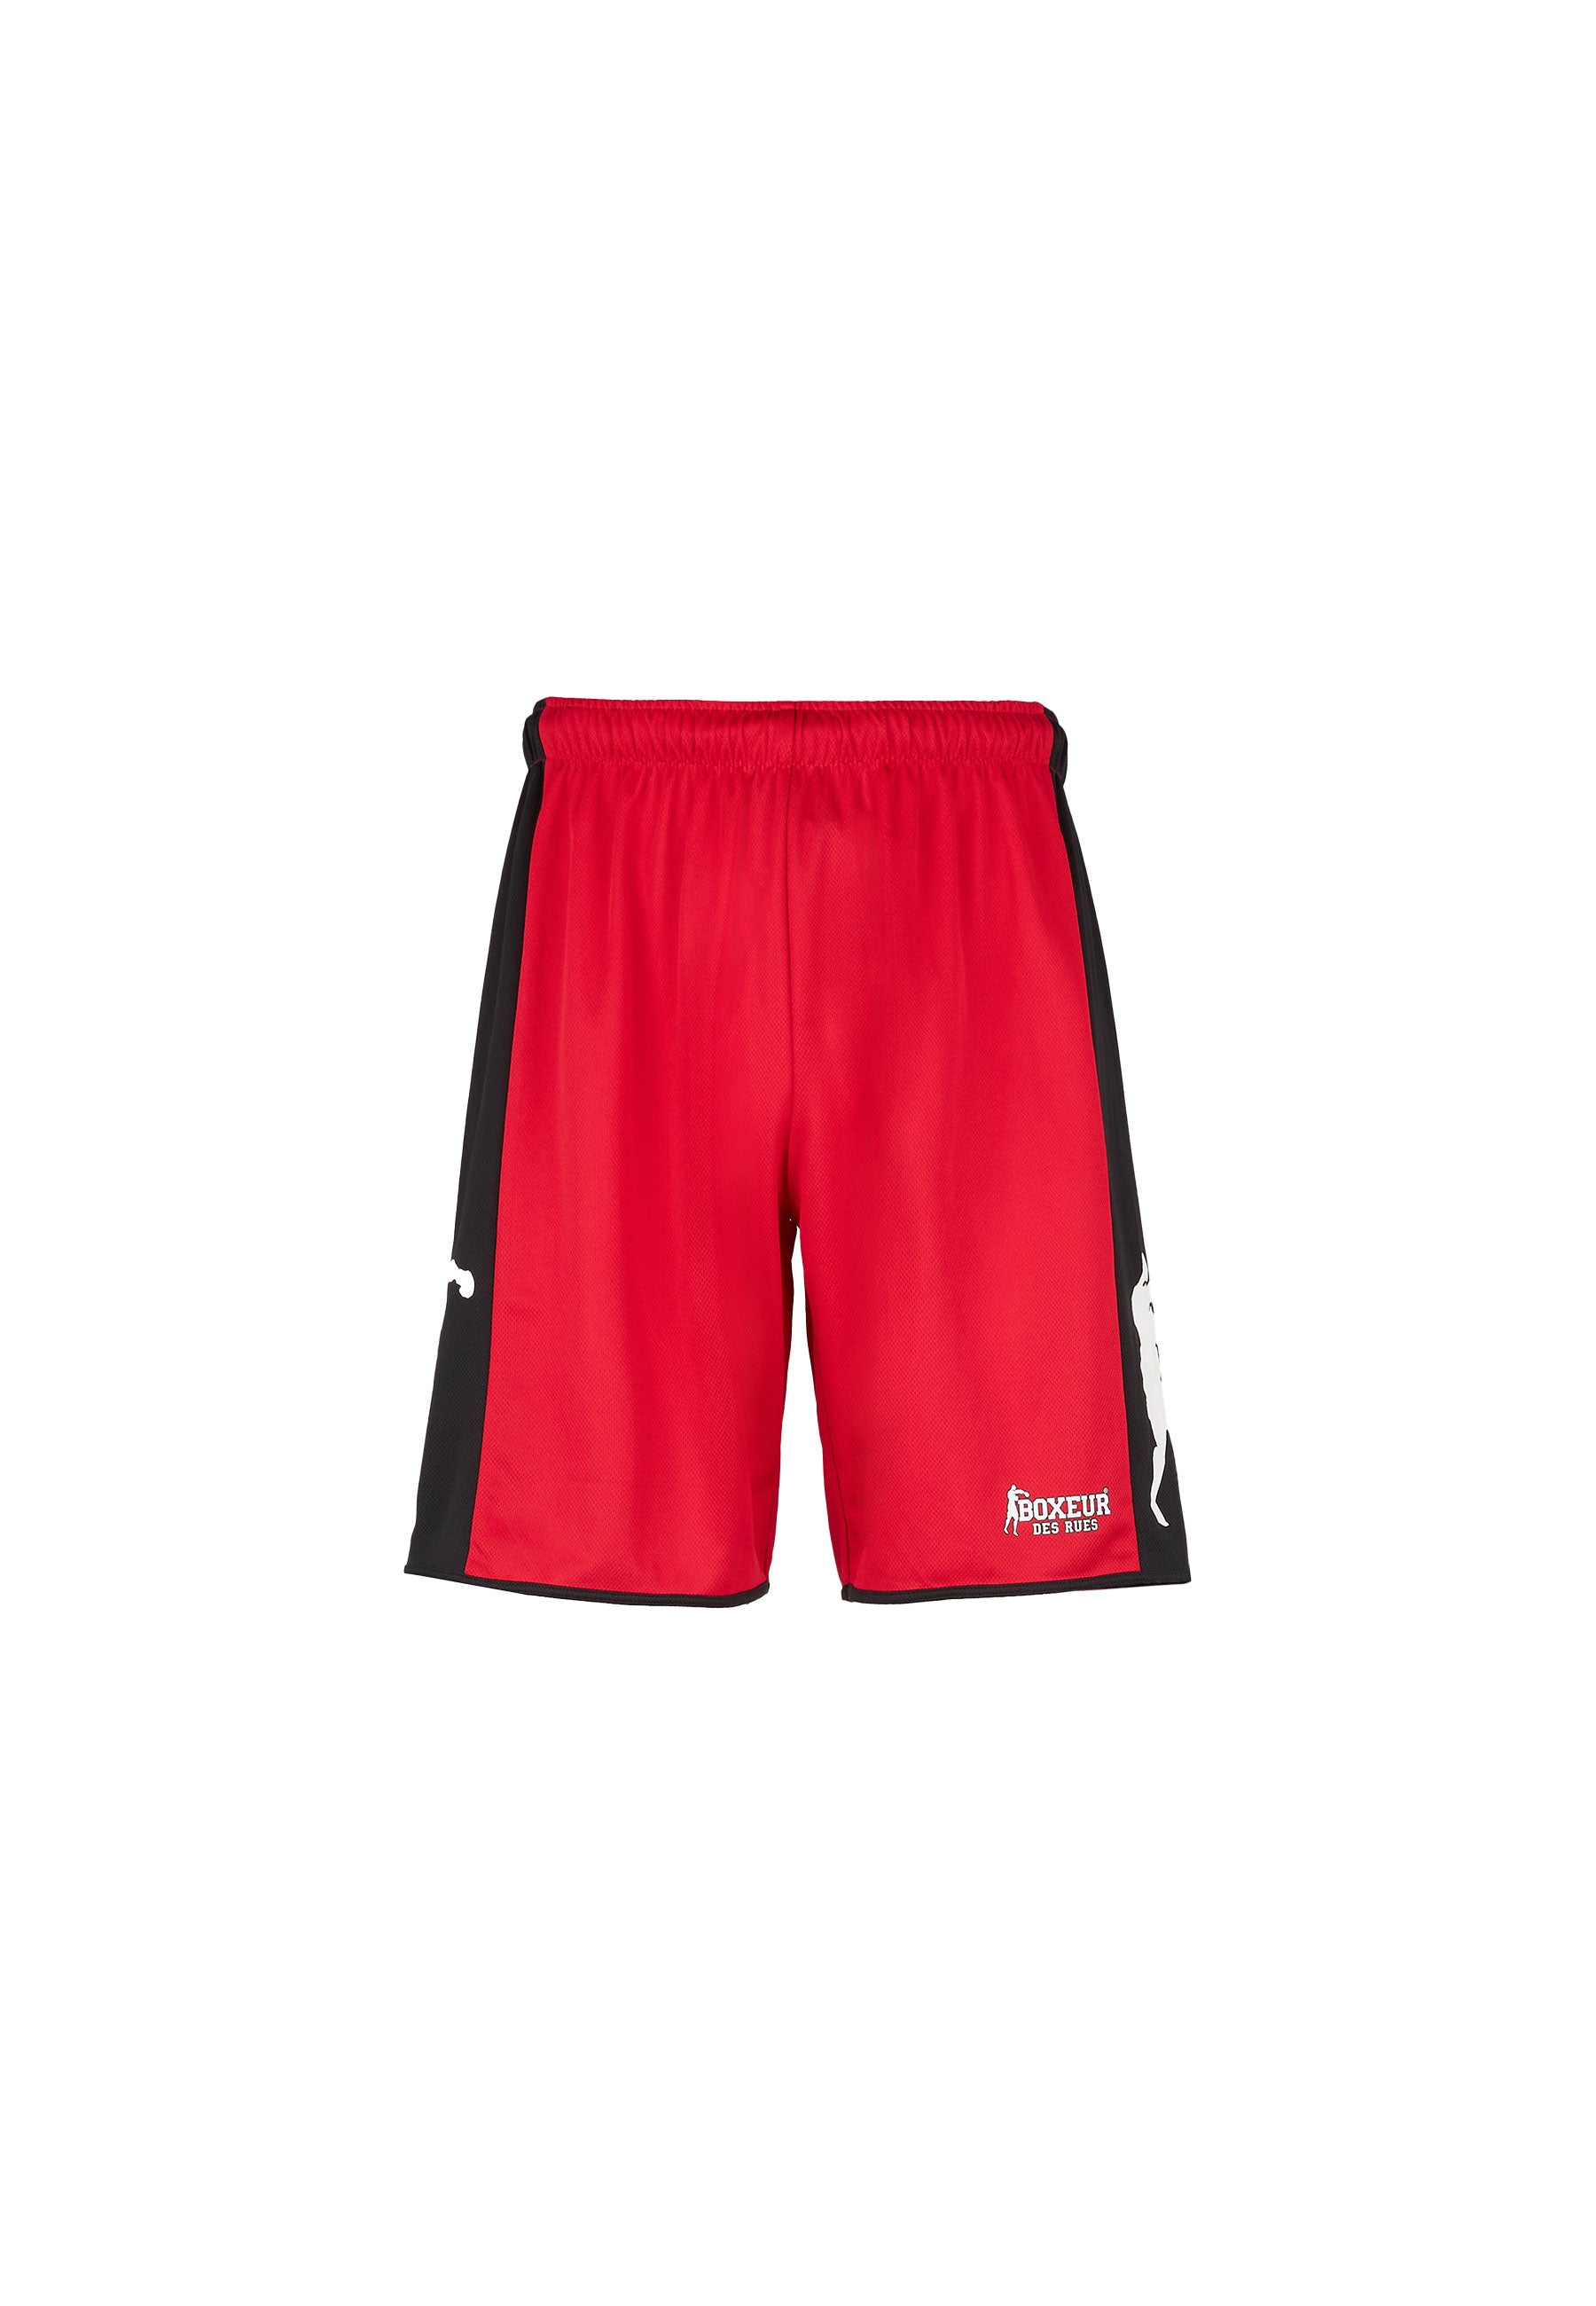 Soccer Basic Shorts in Red Shorts Boxeur des Rues   